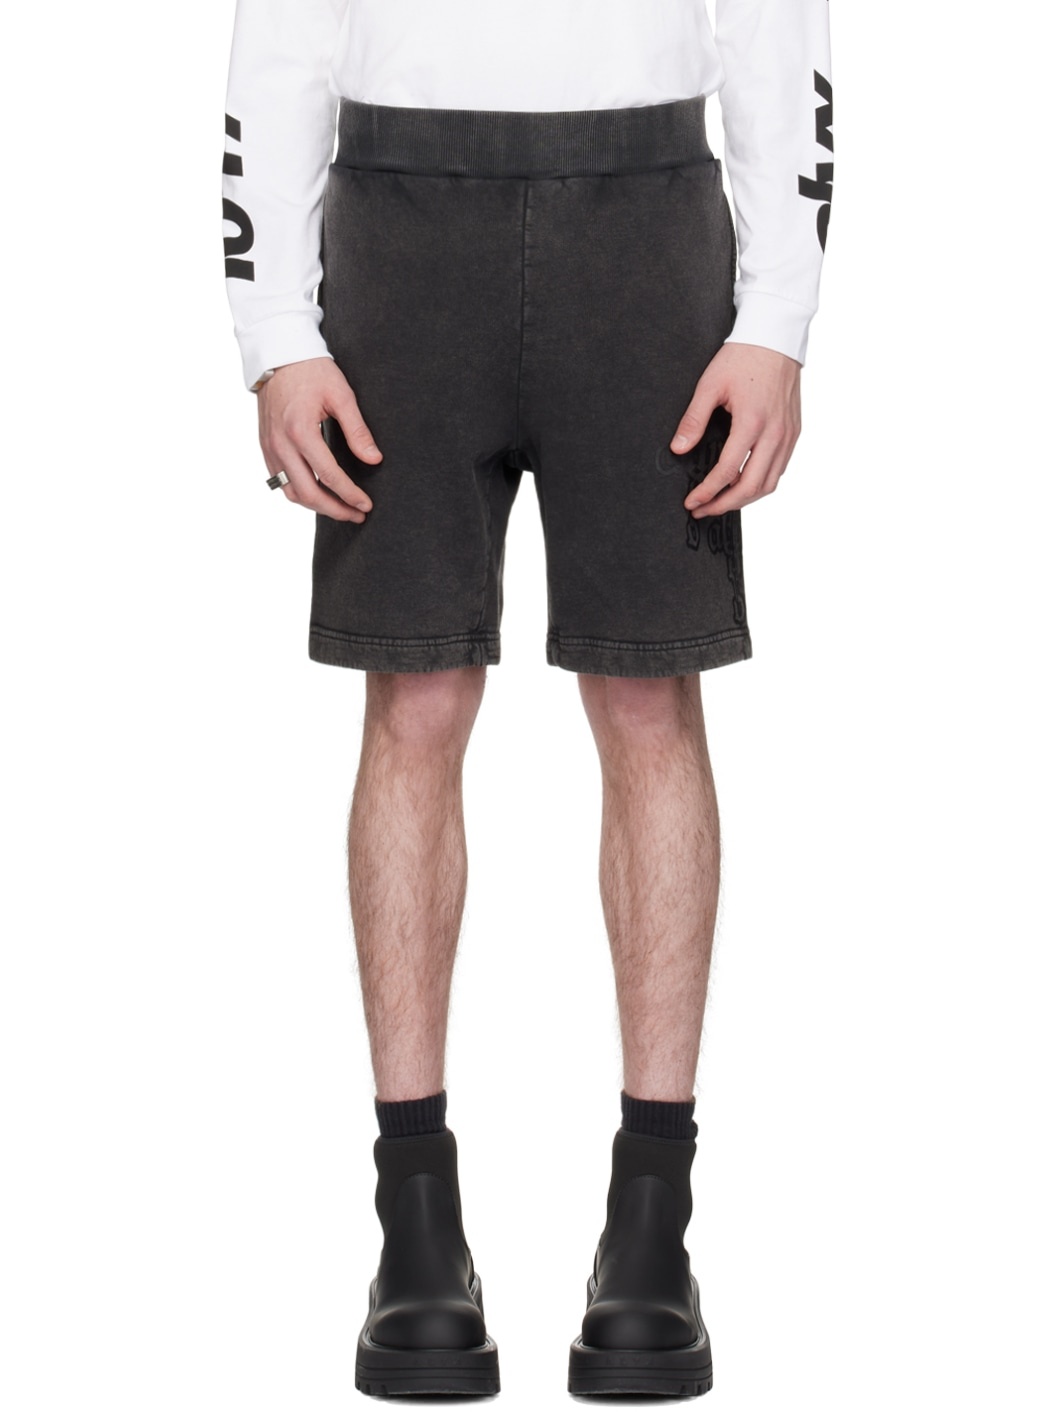 Black Cross Shorts - 1